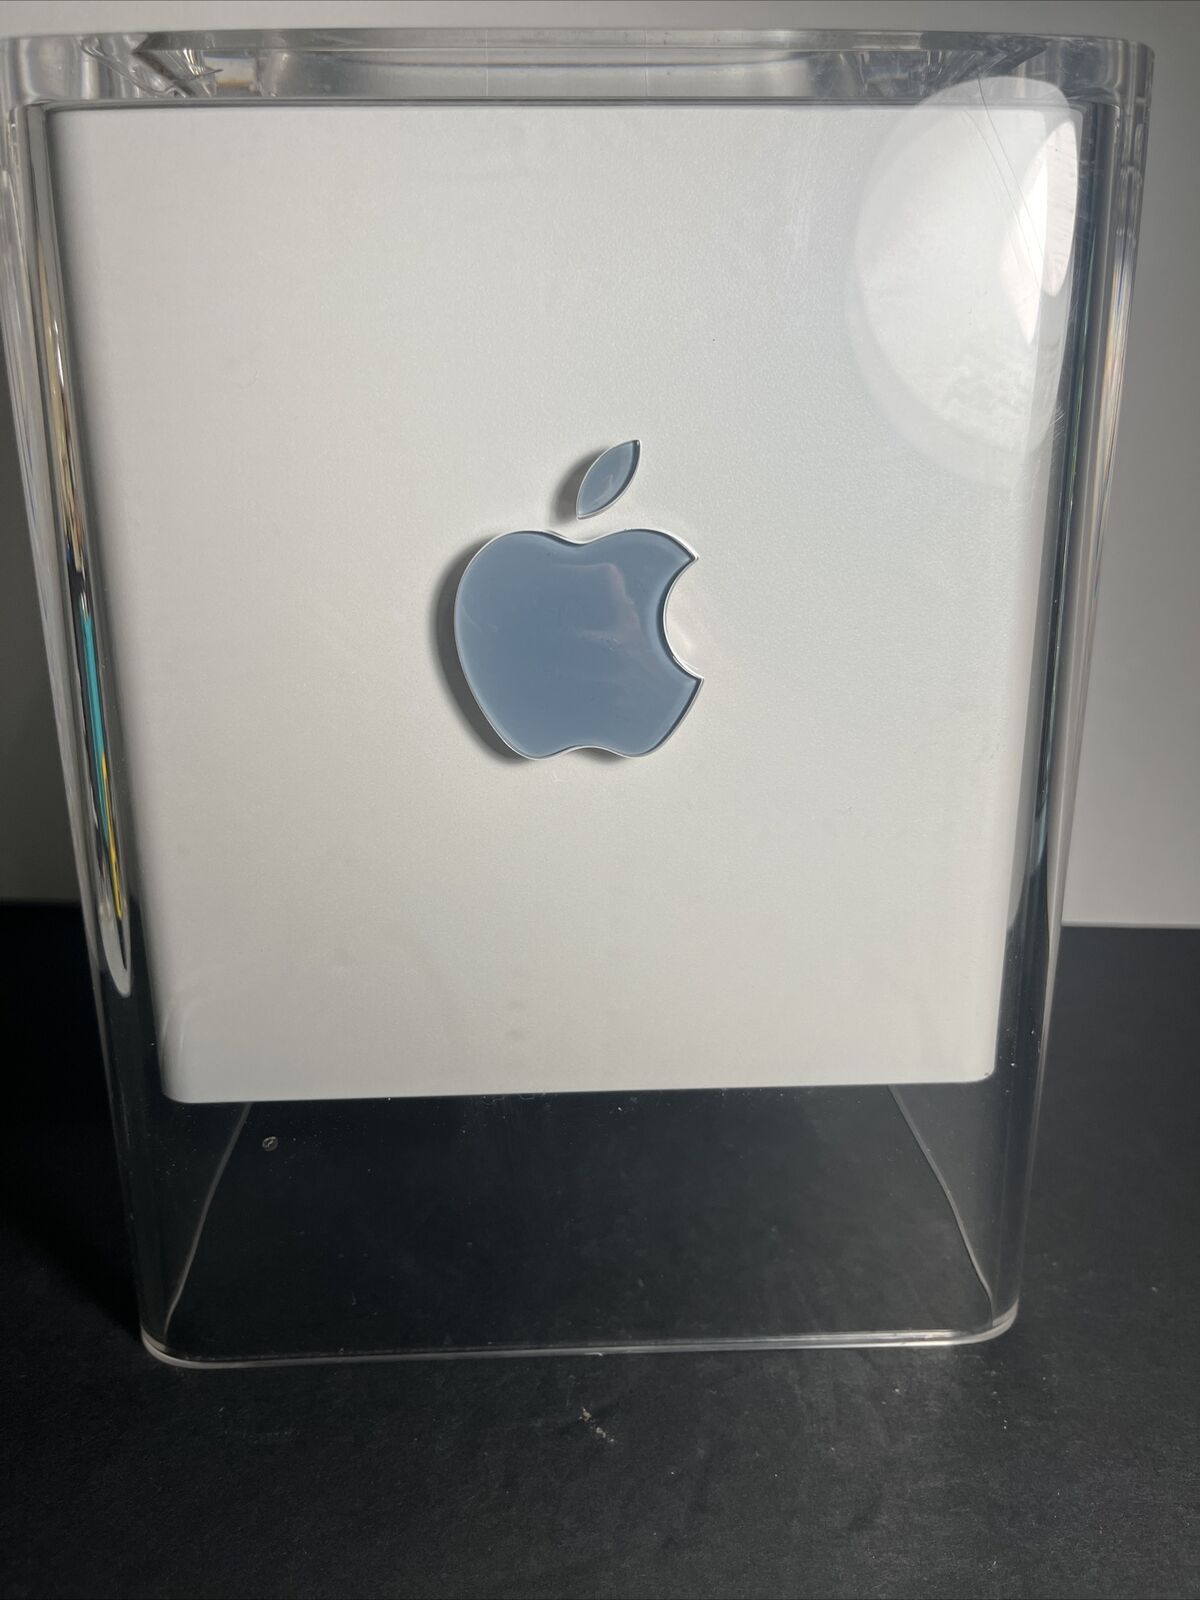 Apple Power Mac G4 Cube Untested